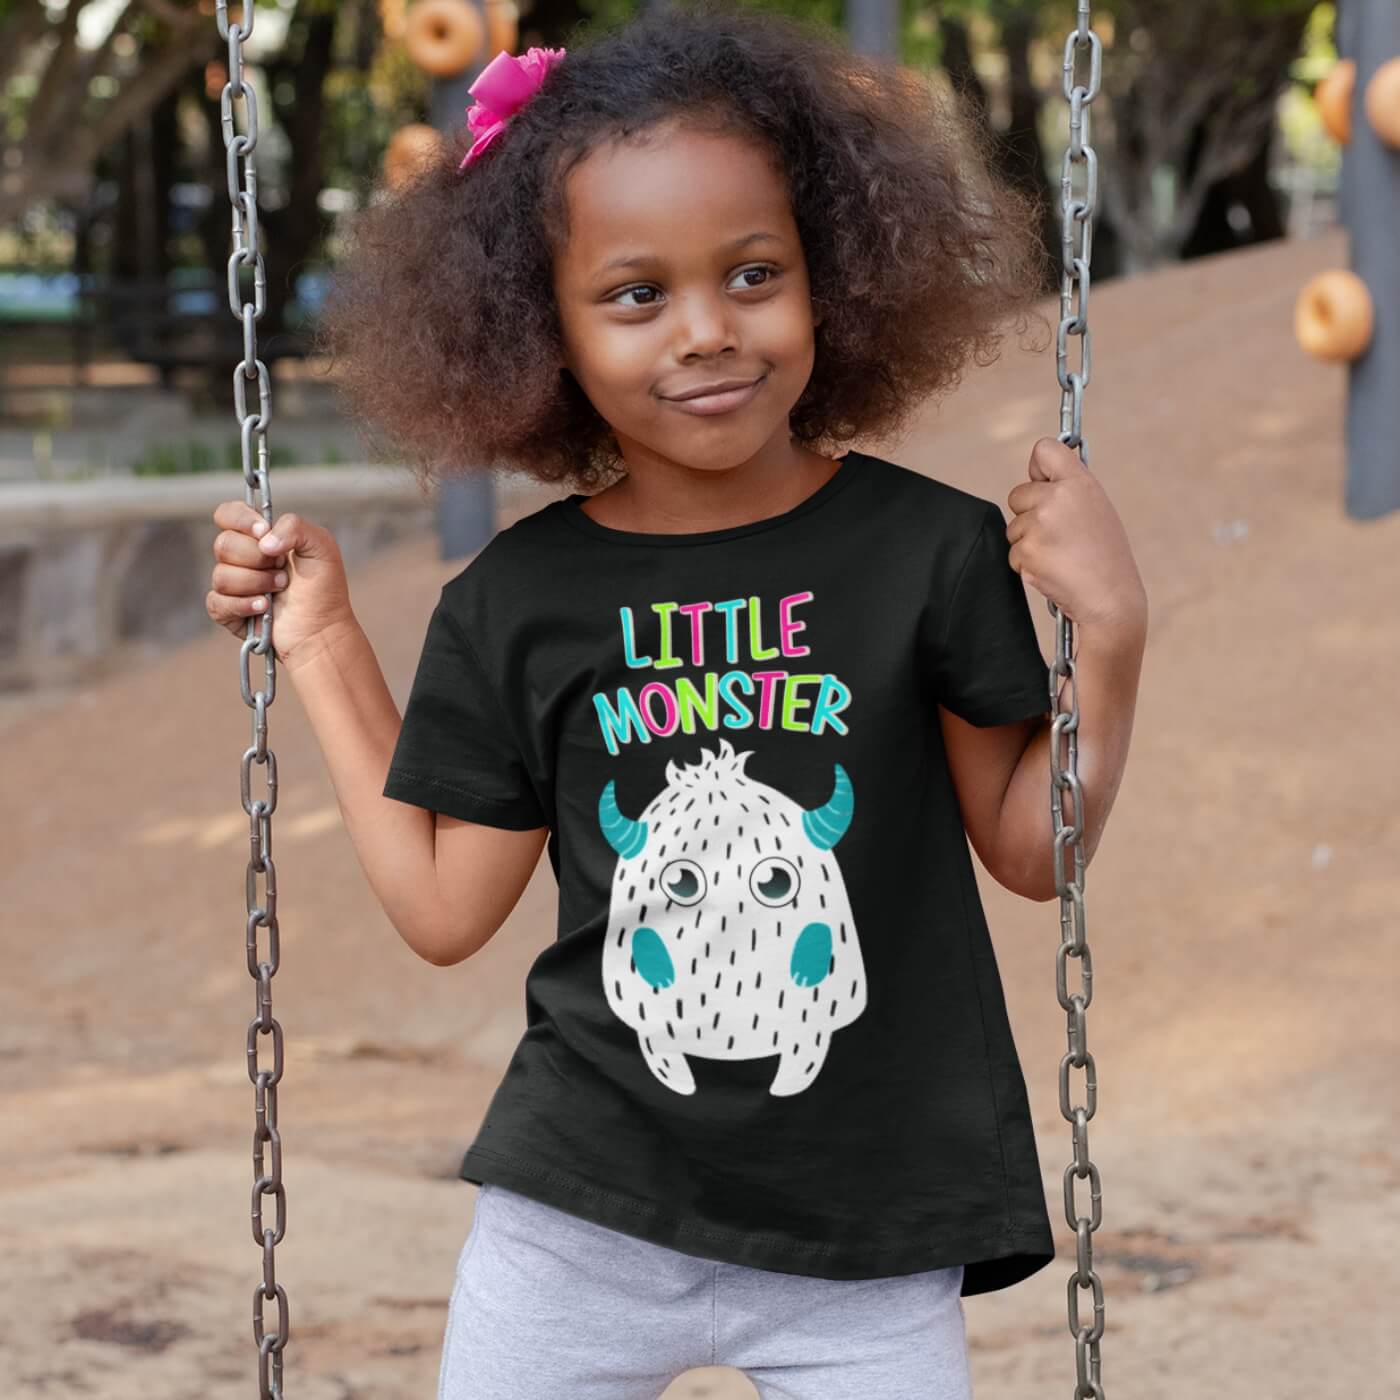 Kids t shirts Black White Monster with worldwide shipping on Vivamake